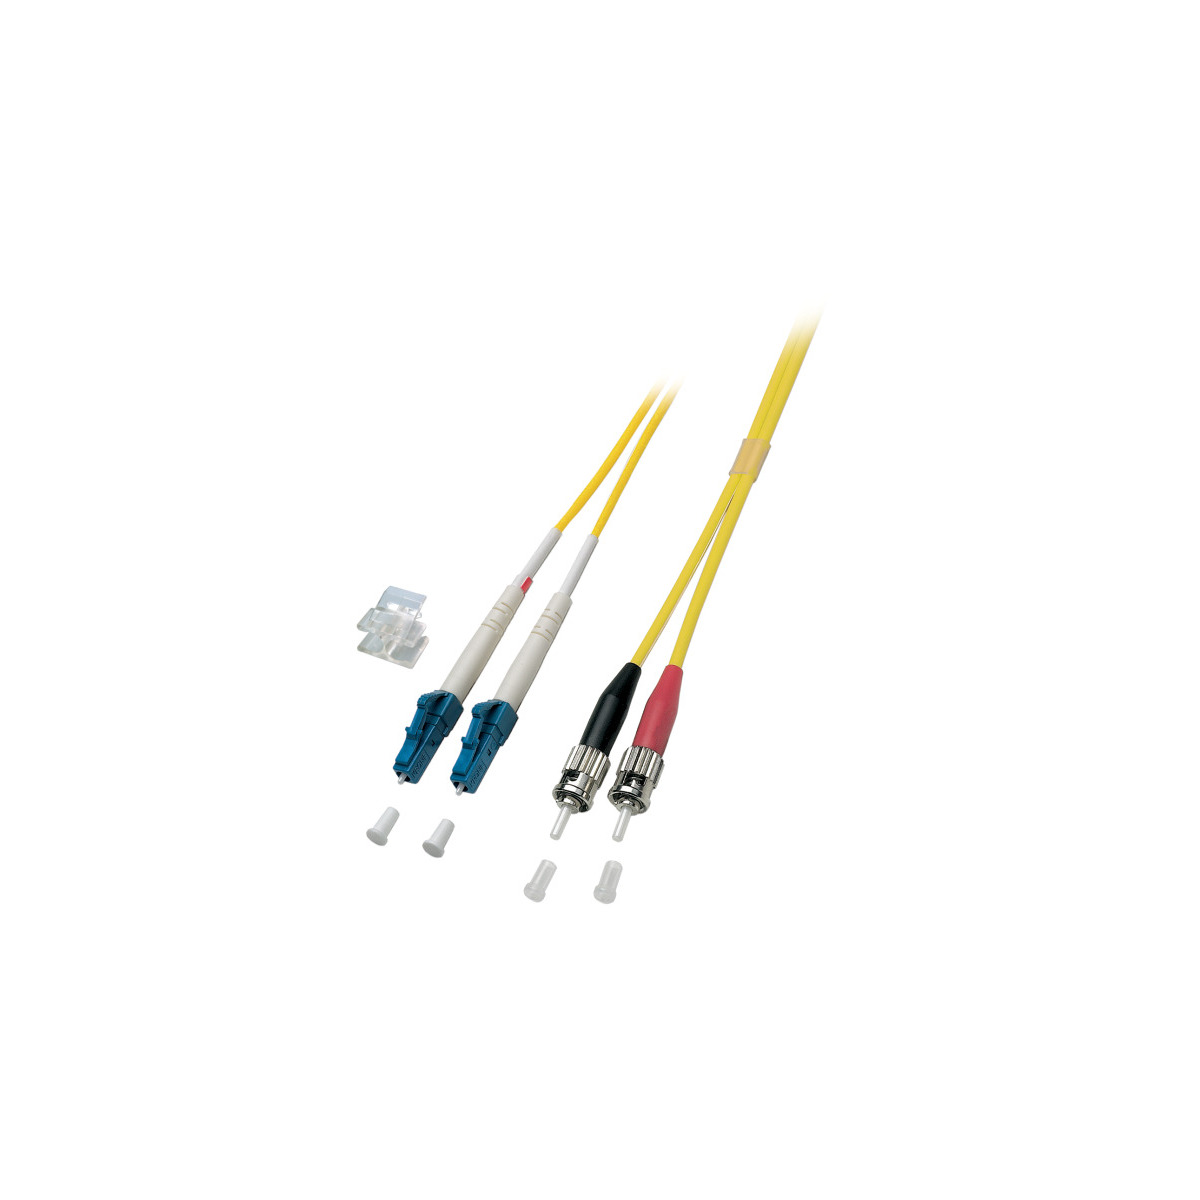 COMMUNIK Kabel Duplex - ST, / 2 Jumper LC Glasfaserkabel, m